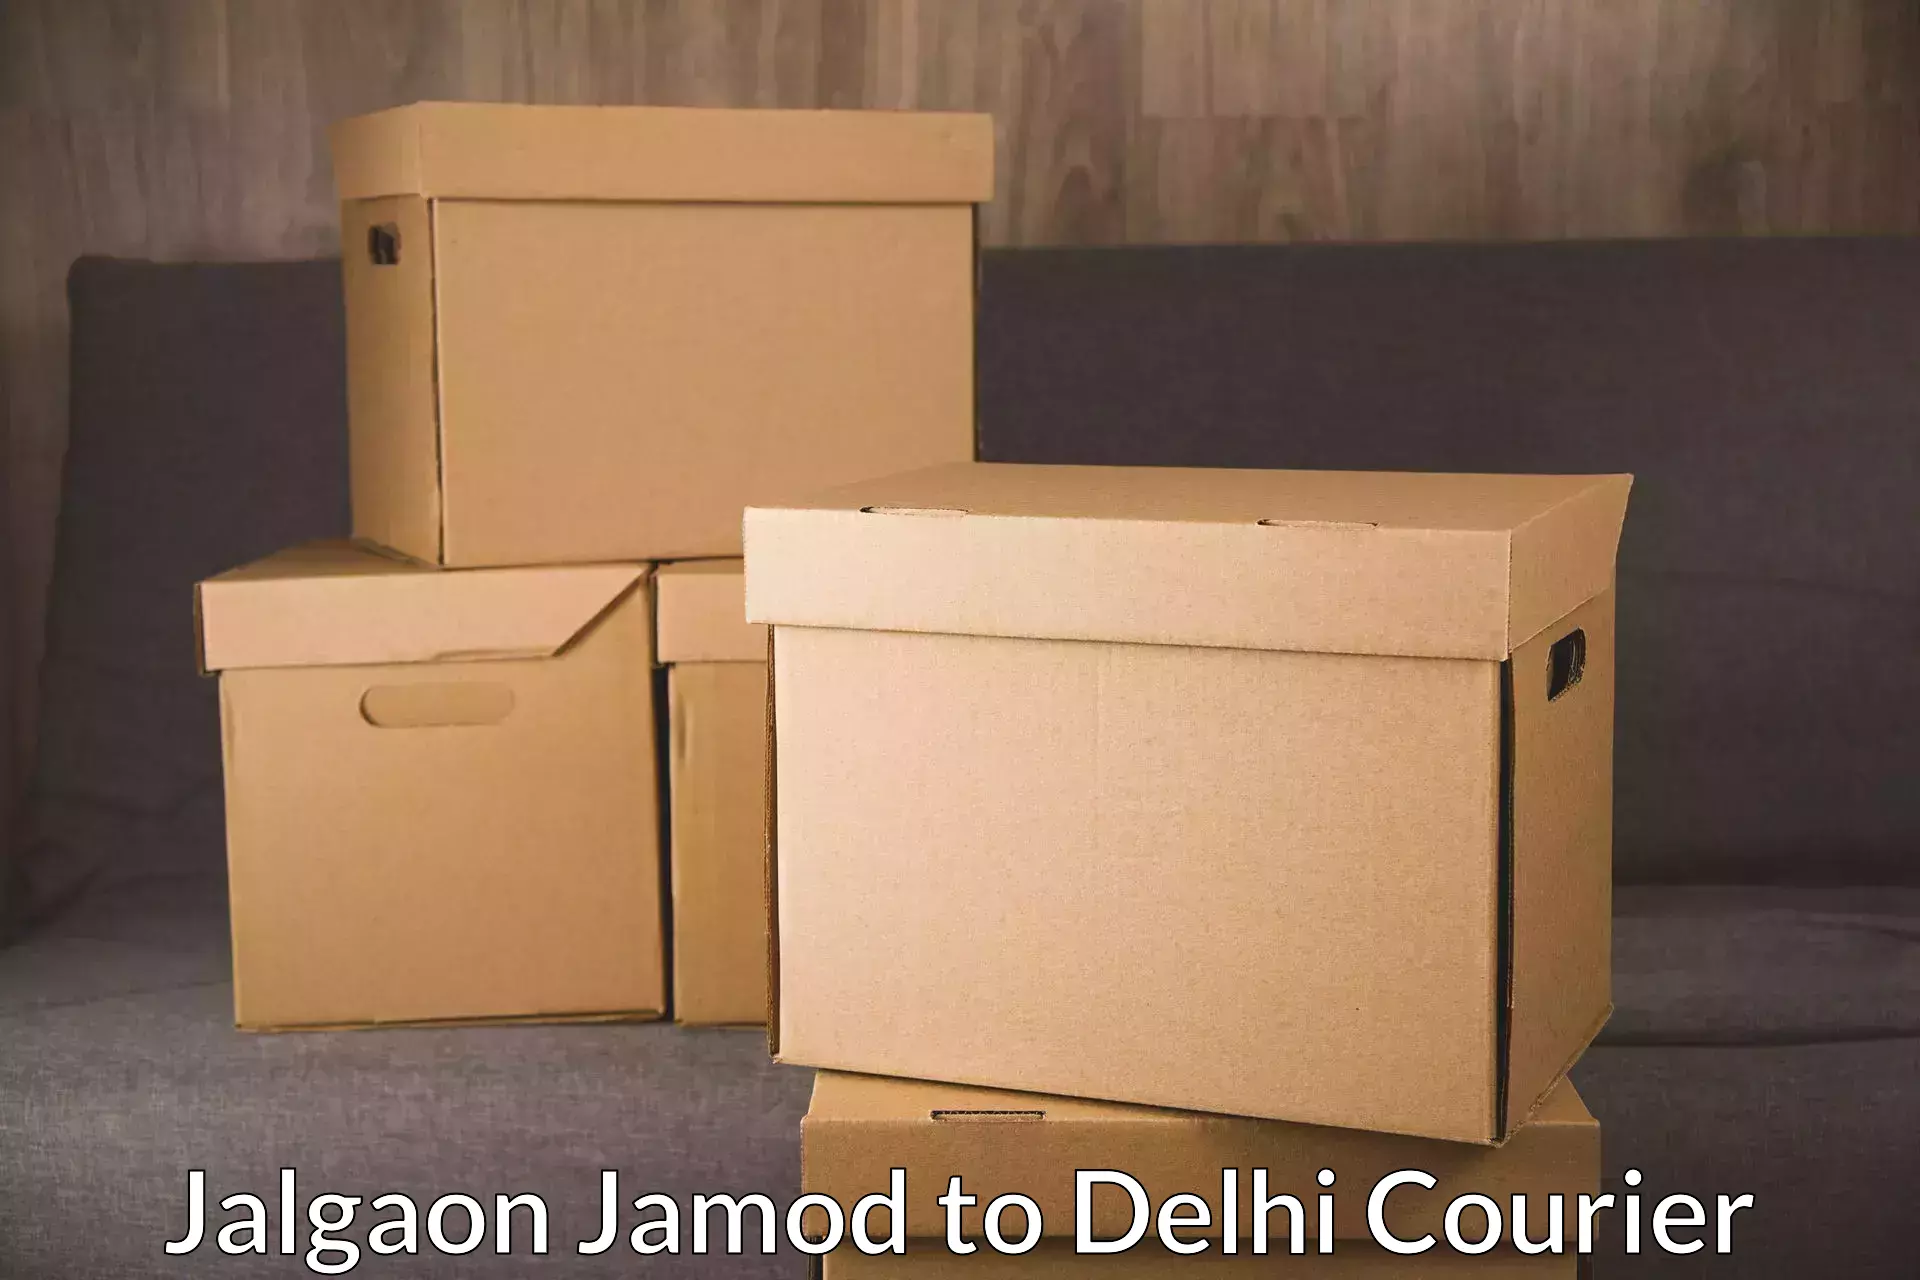 Doorstep delivery service Jalgaon Jamod to University of Delhi